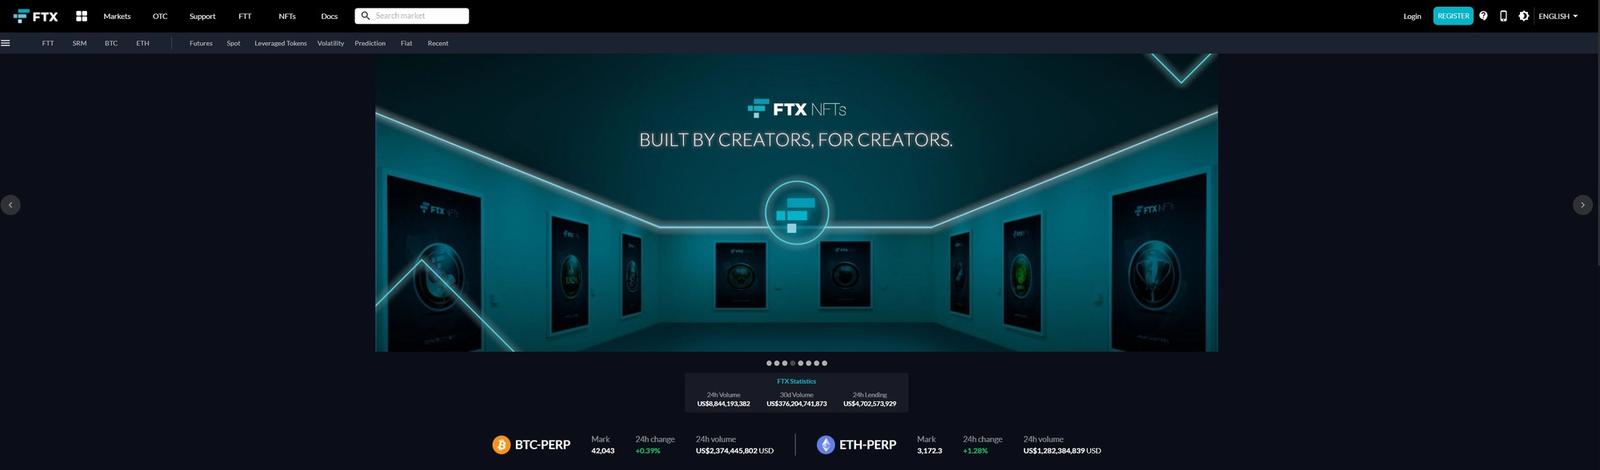 FTX website